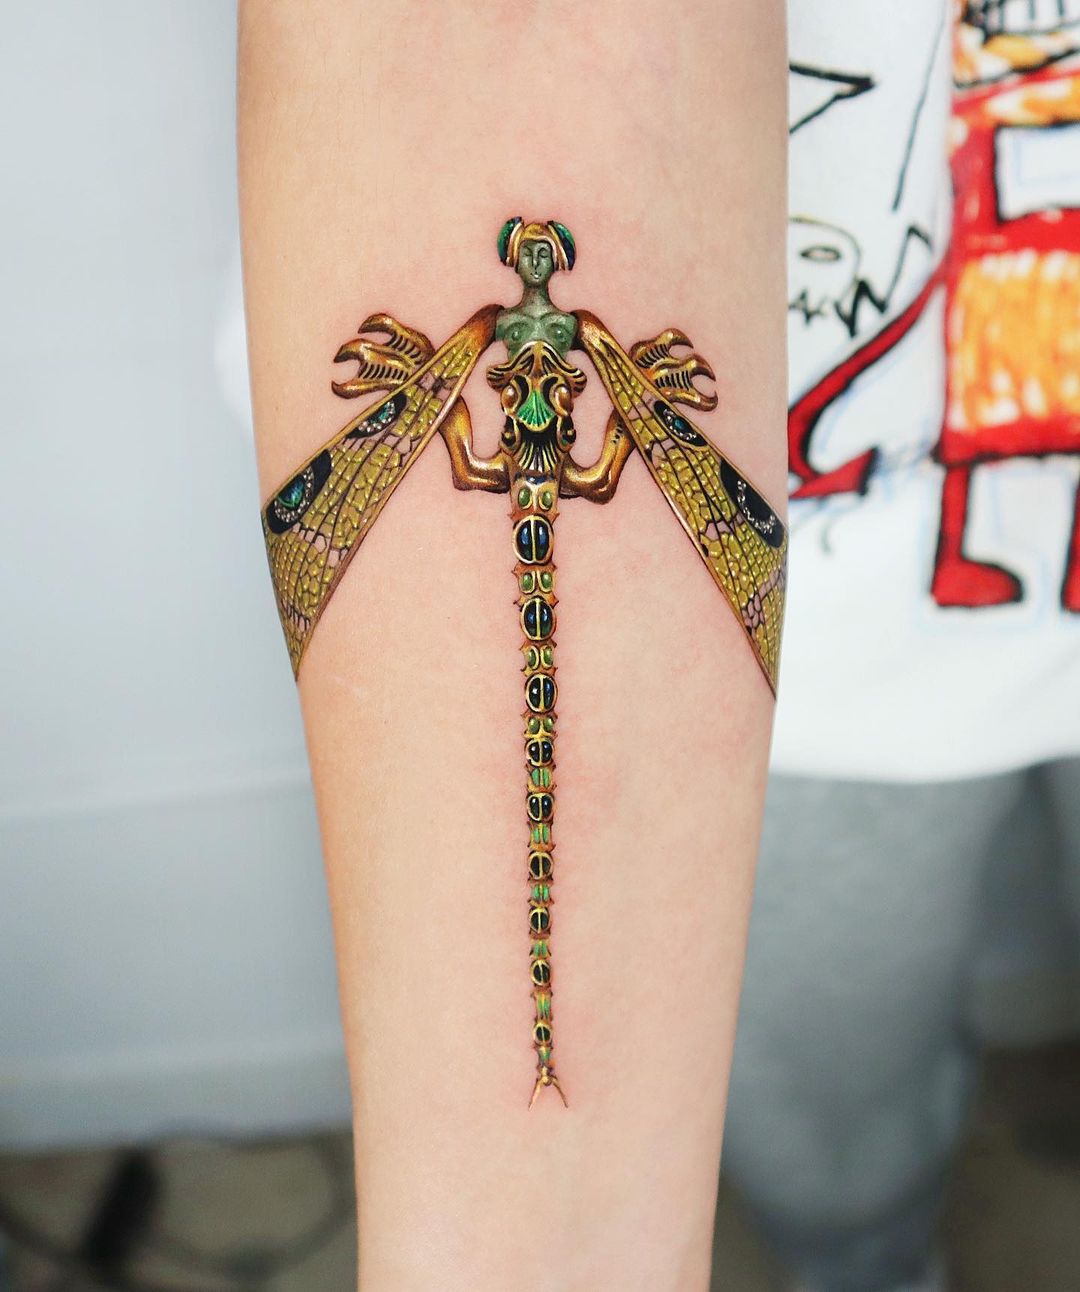 Dragonfly tattoo ideas for men by jooa tattoo